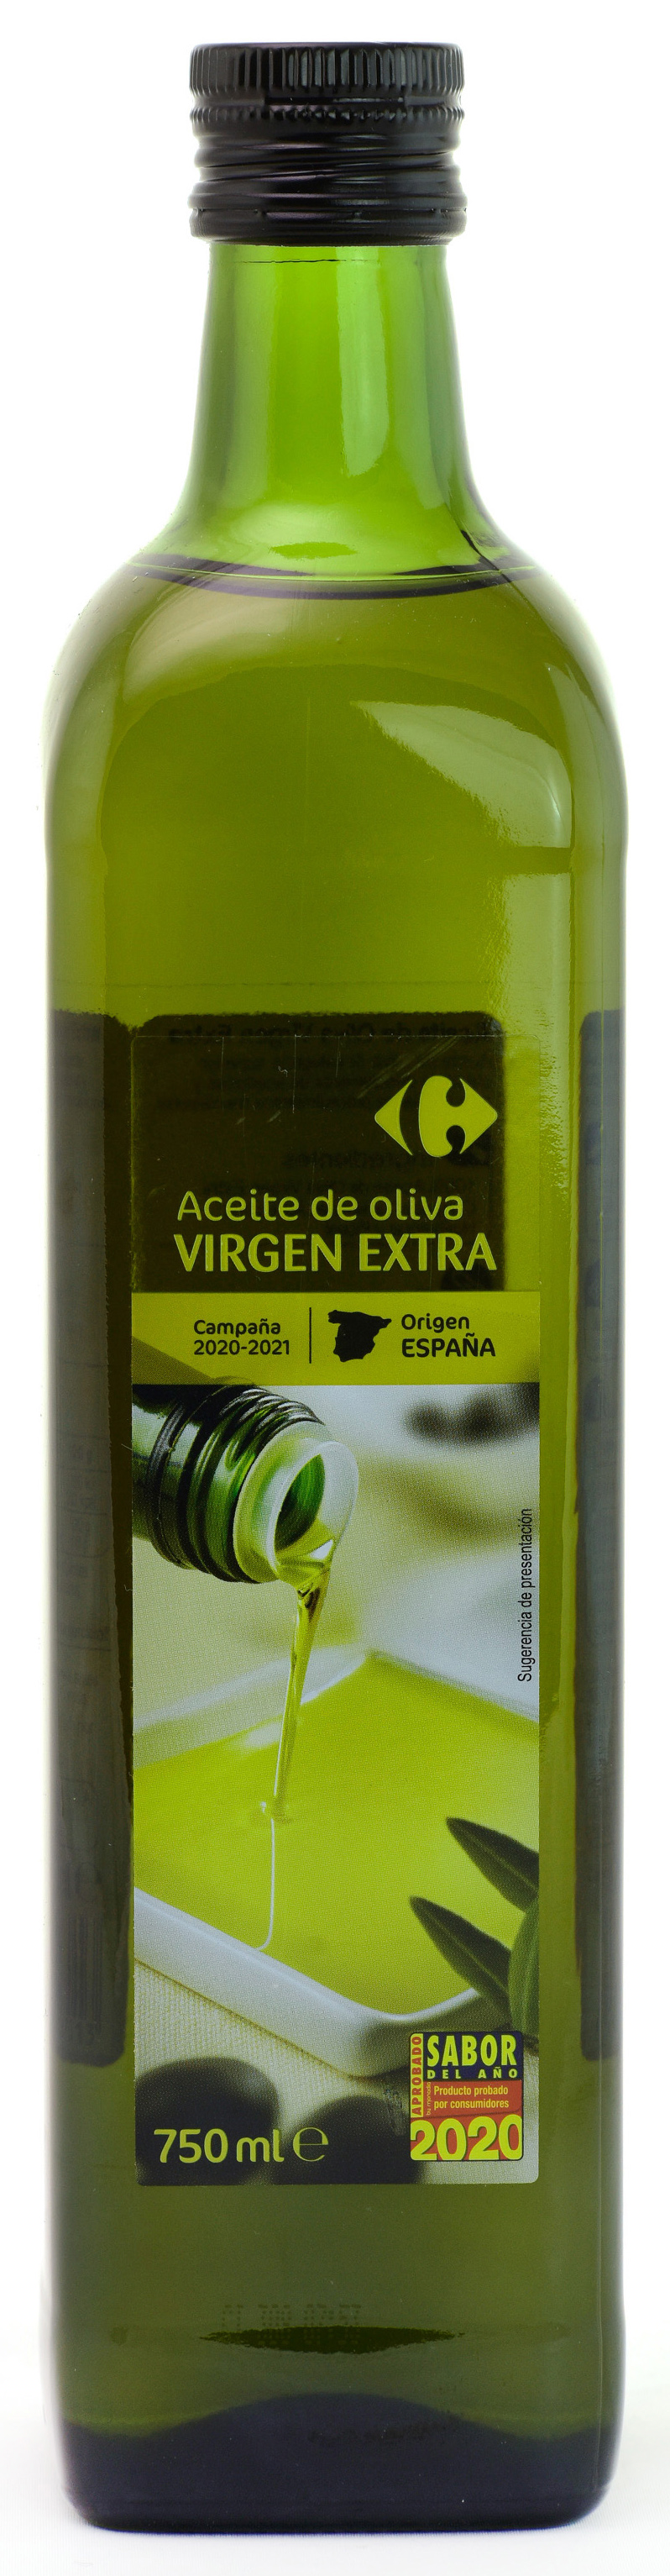 ACEITE DE OLIVA VIRGEN EXTRA